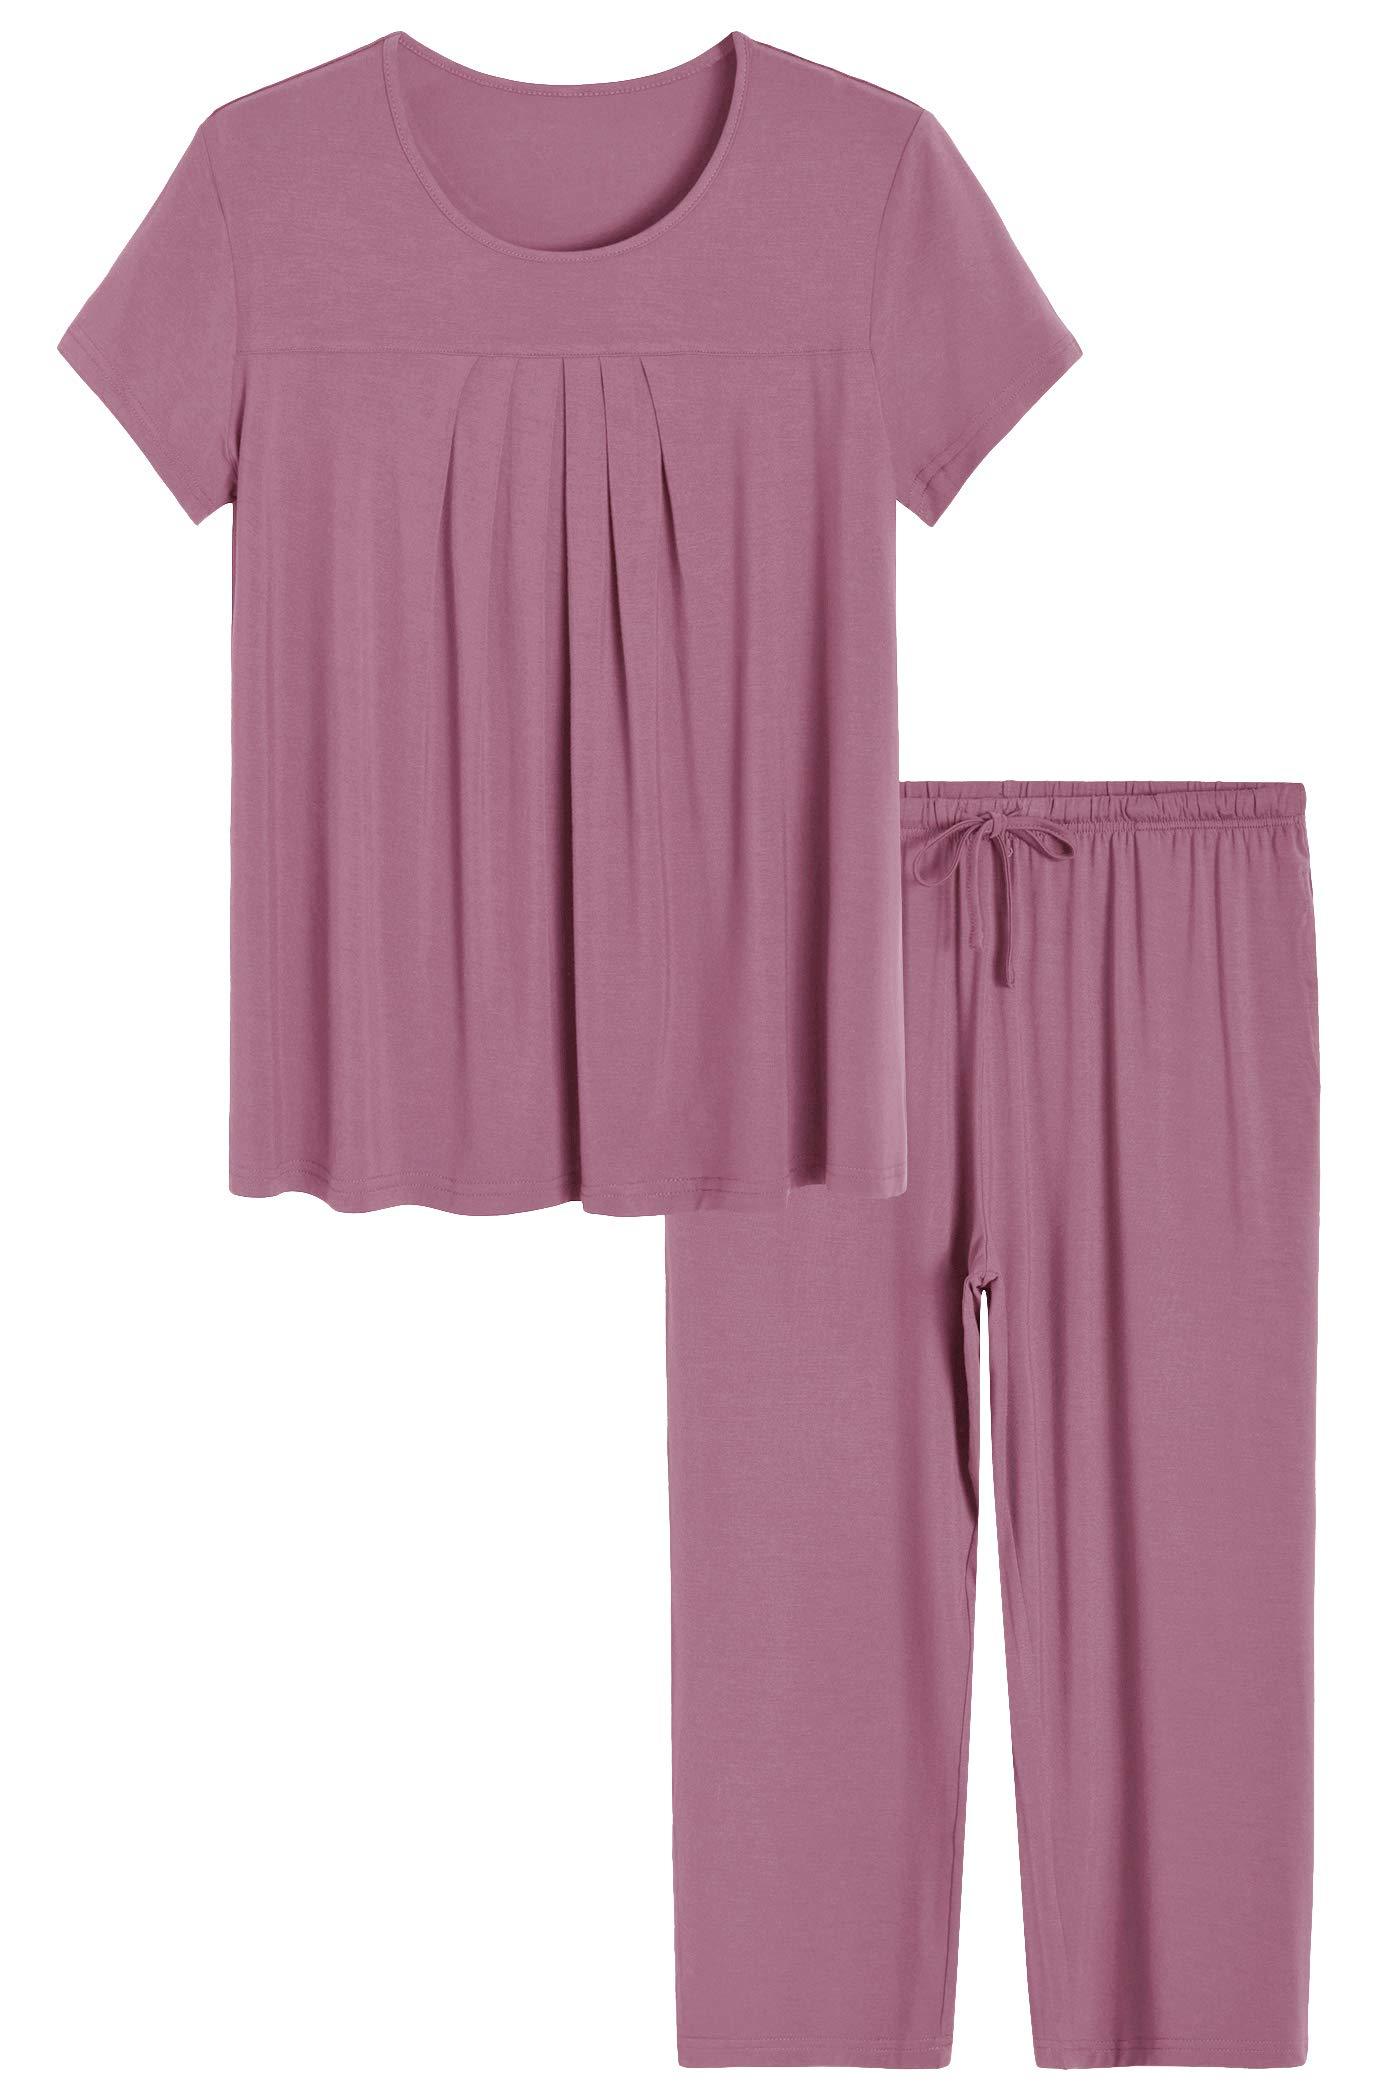 LATUZA Pajamas for Women - Poshmark